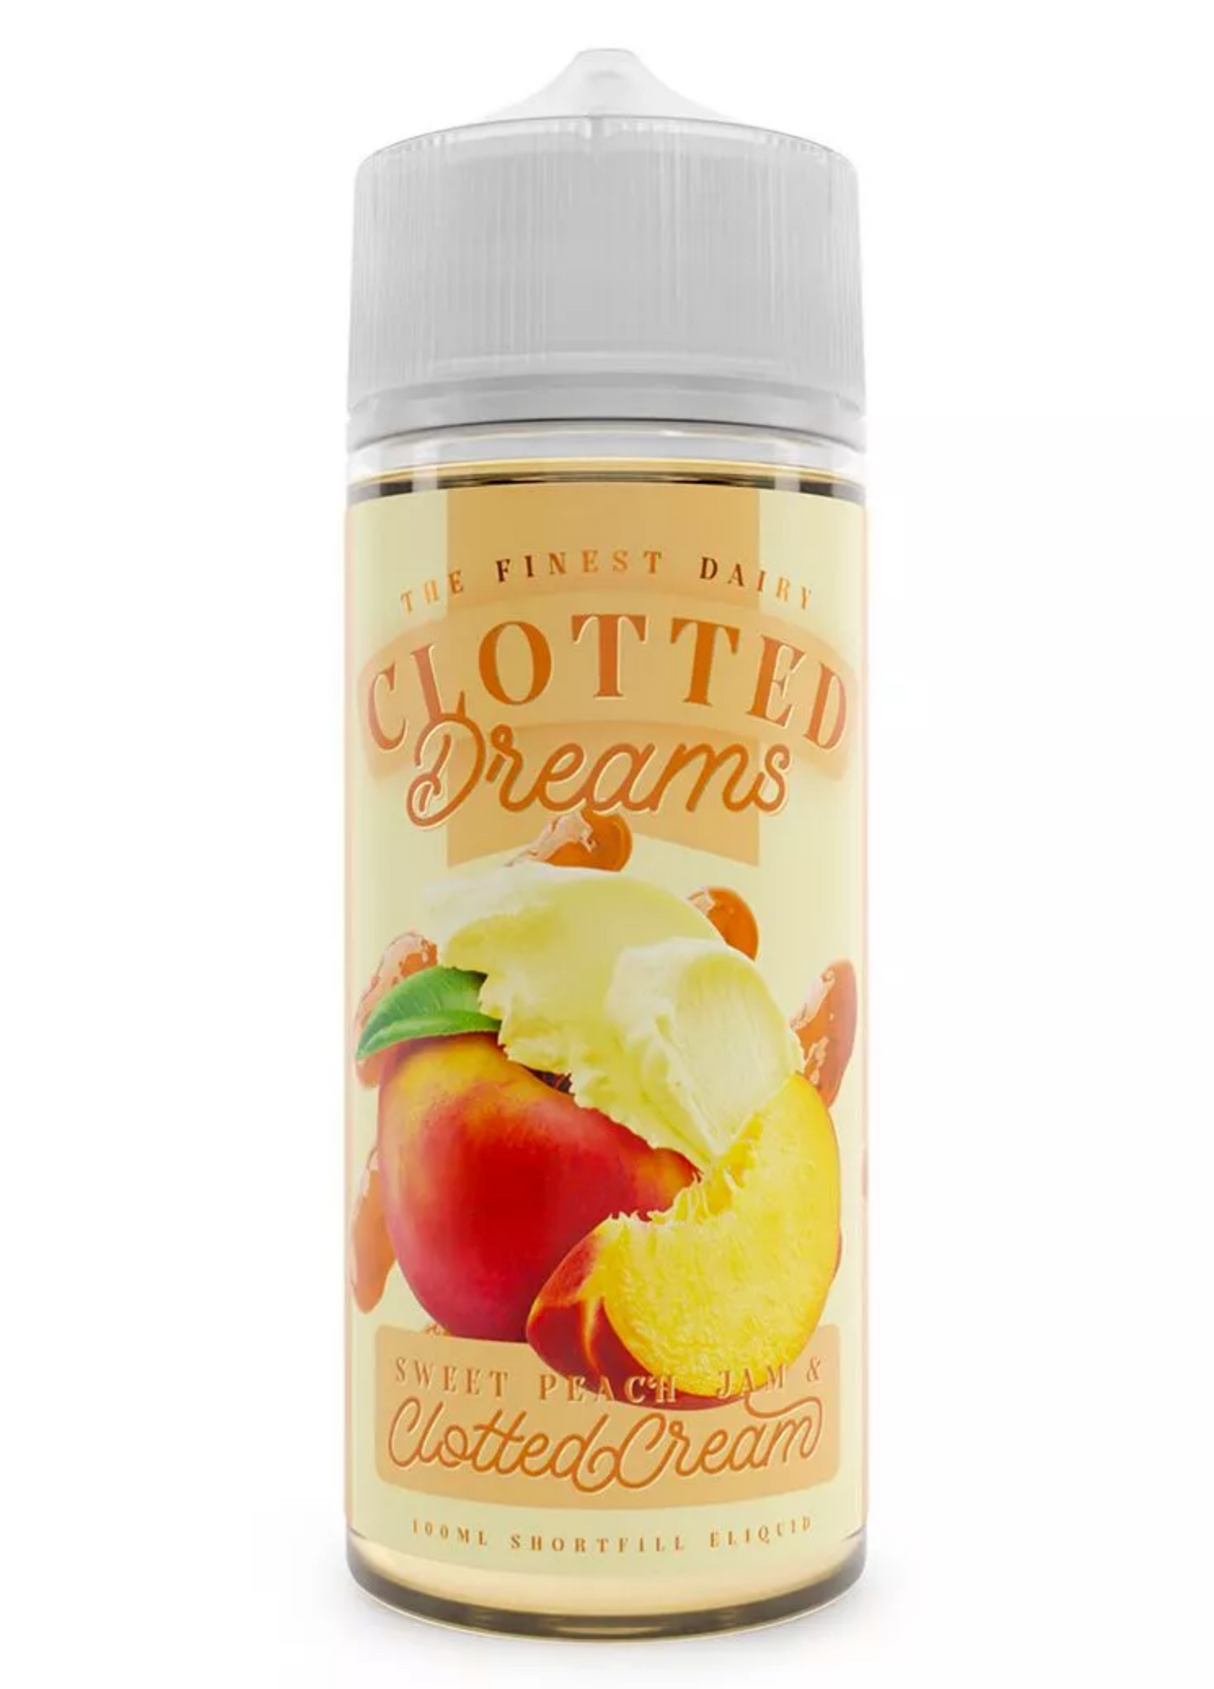 Clotted Dreams - Sweet Peach Jam & Clotted Cream - 100ml - 0mg - My Vape Store UK